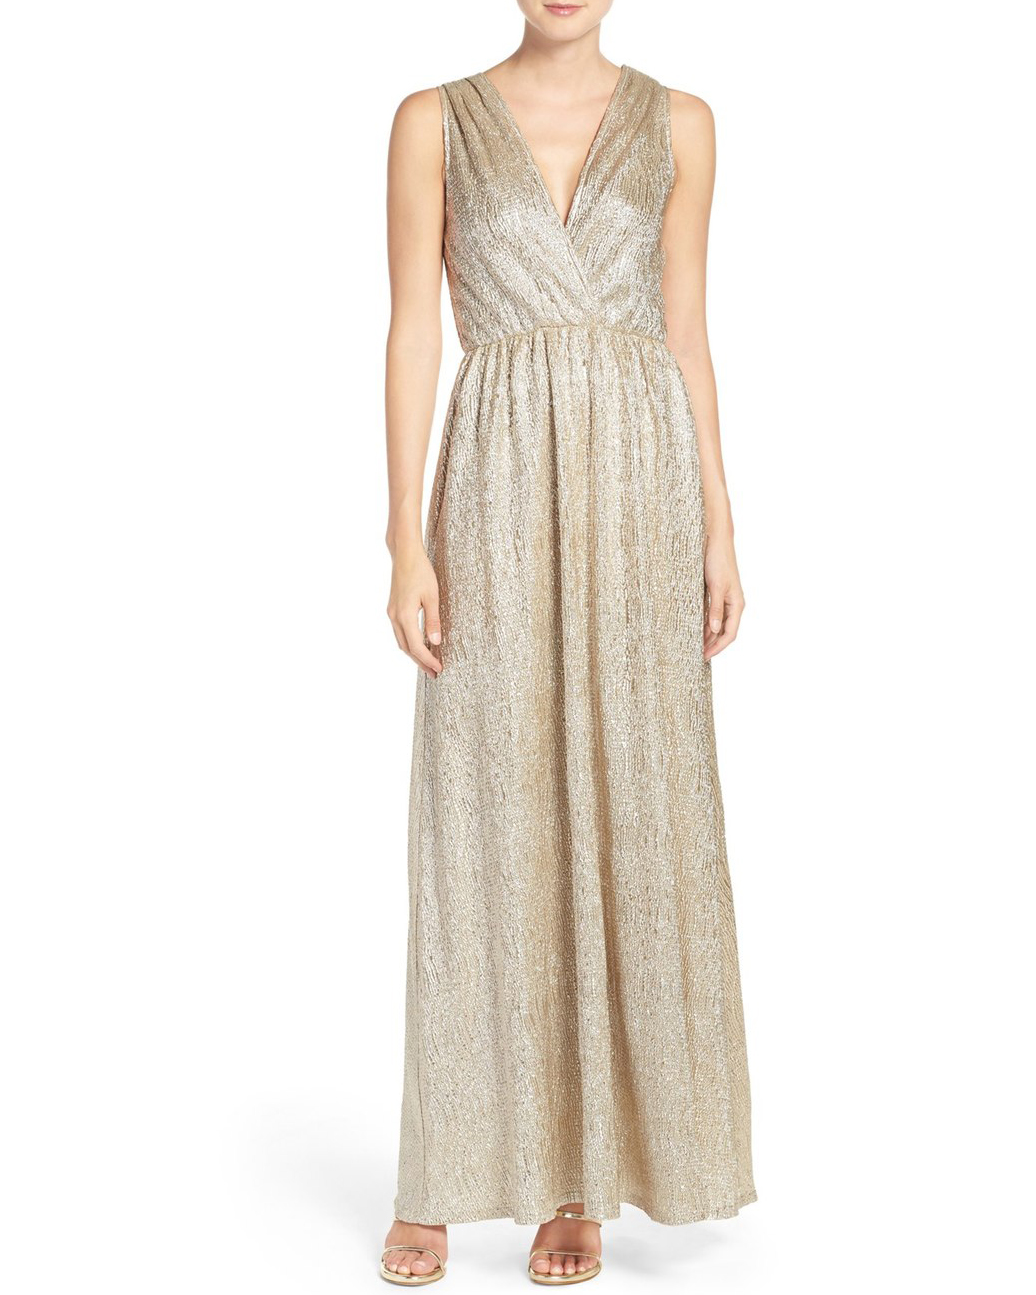 Gold Bridesmaid Dresses | Martha Stewart Weddings